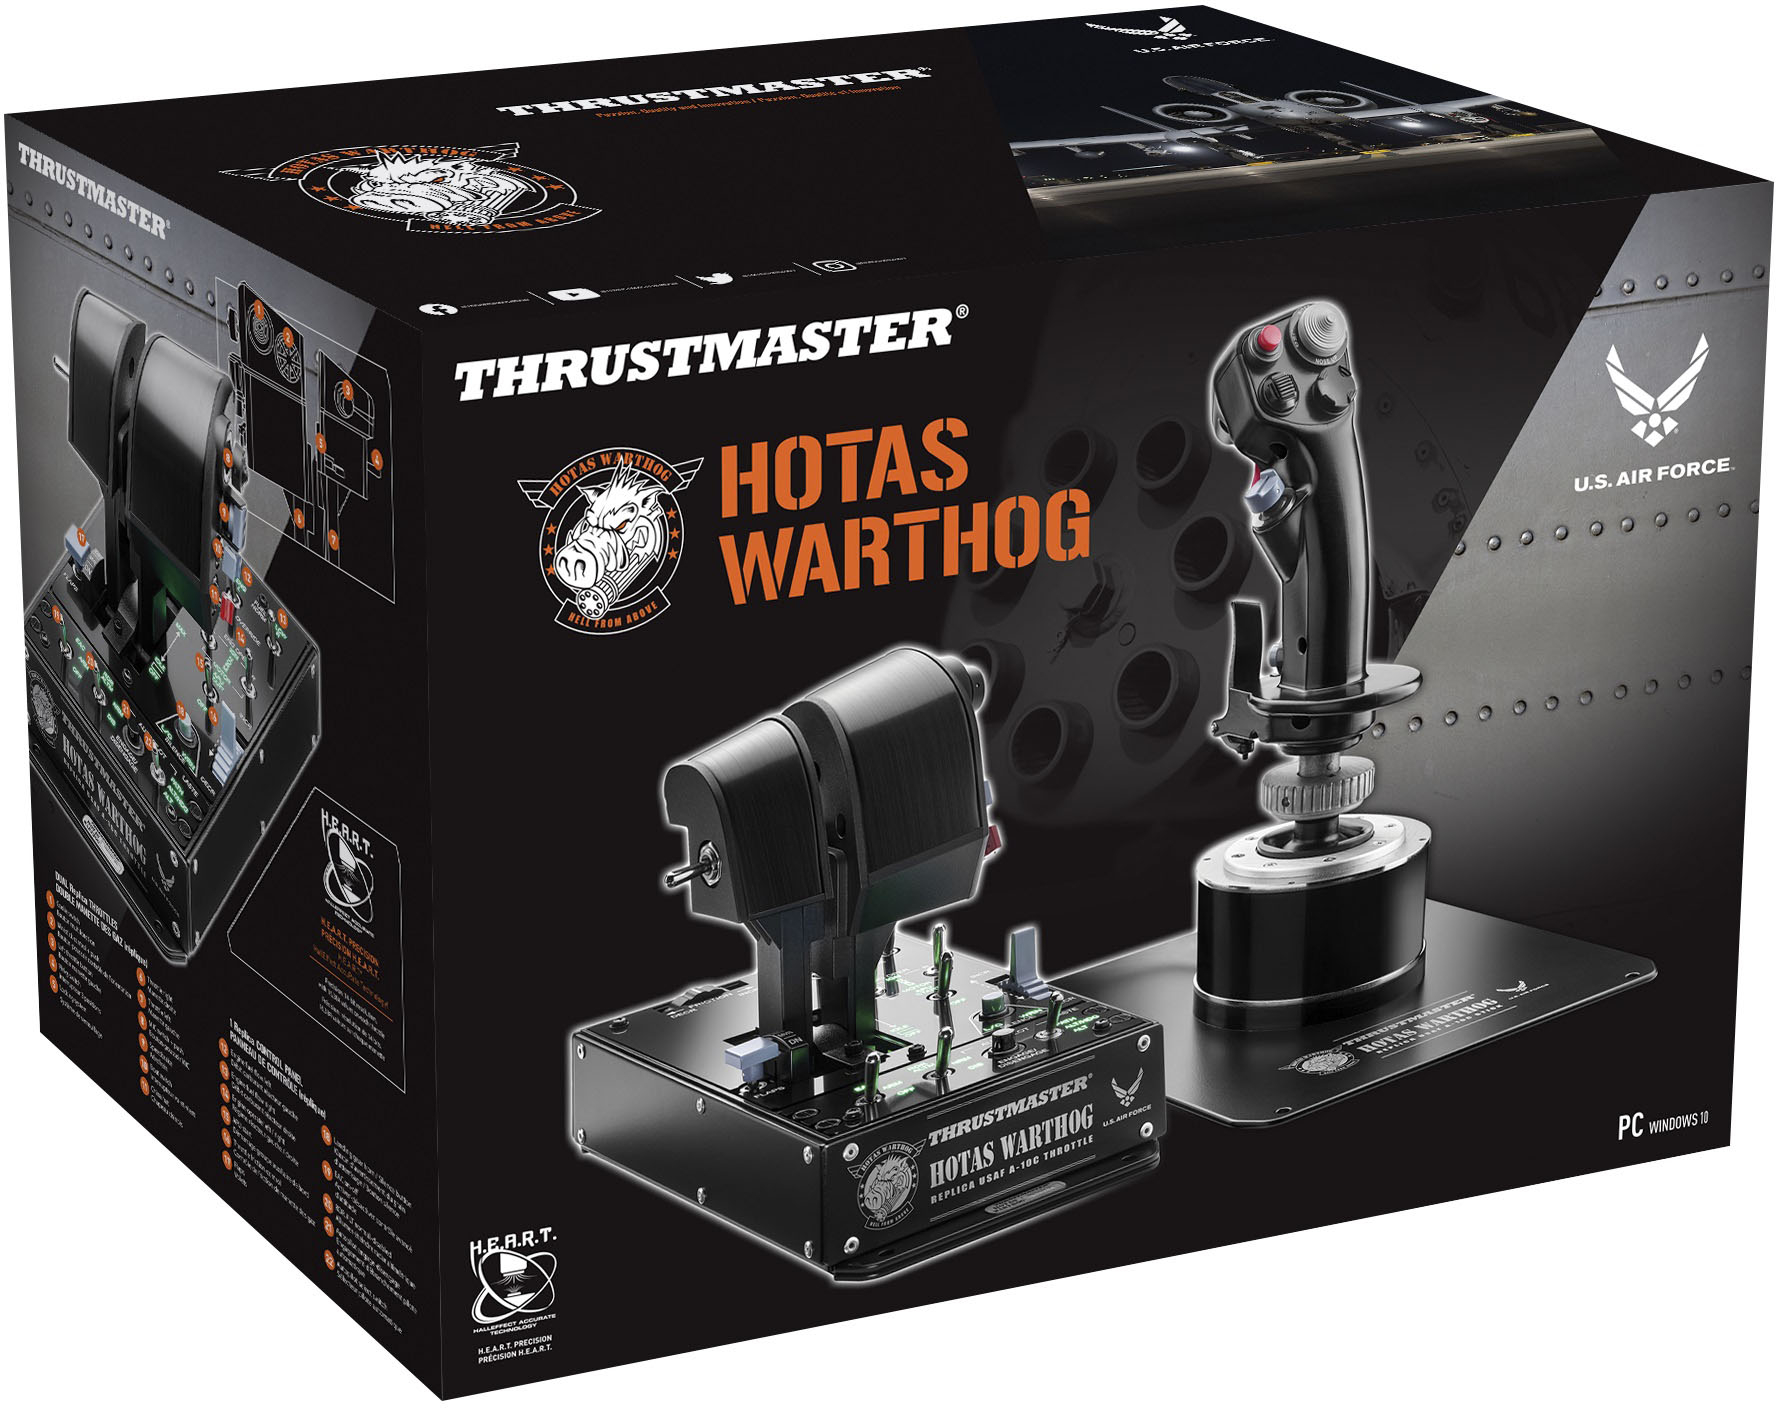 Thrustmaster Hotas Warthog - CD Rom Inc